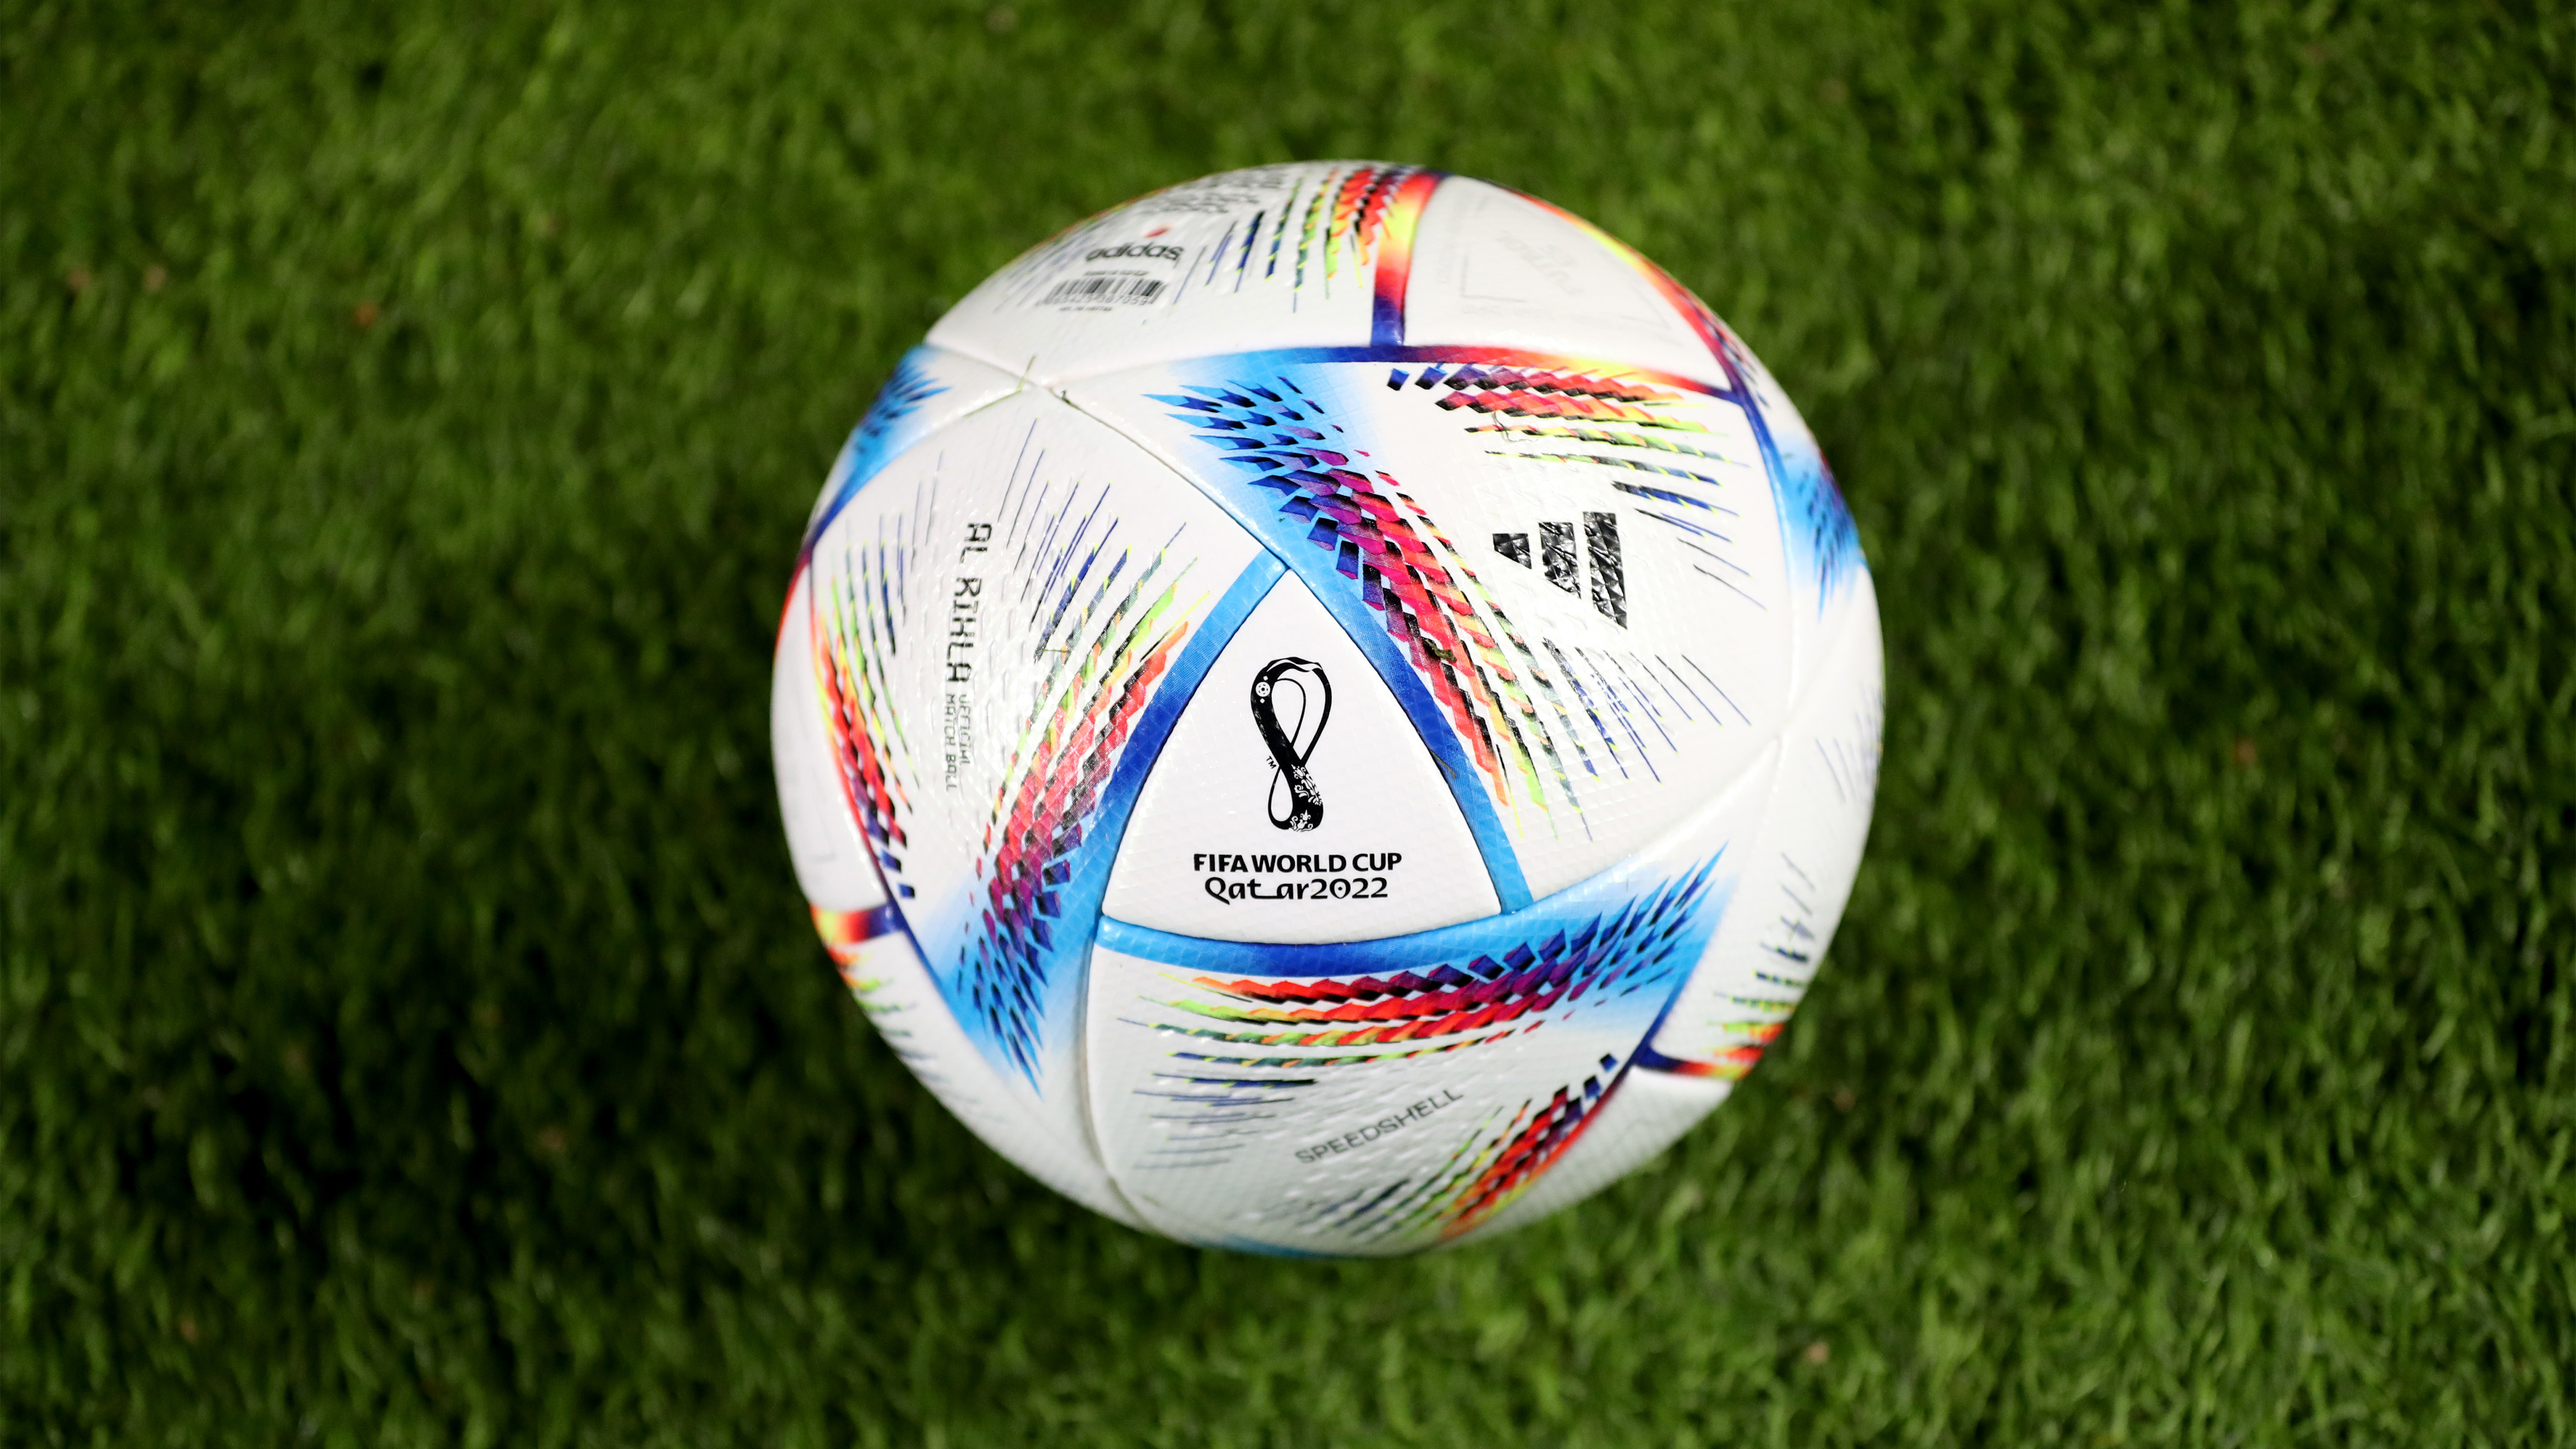 Camera-Loaded Soccer Balls : brazuca soccer ball